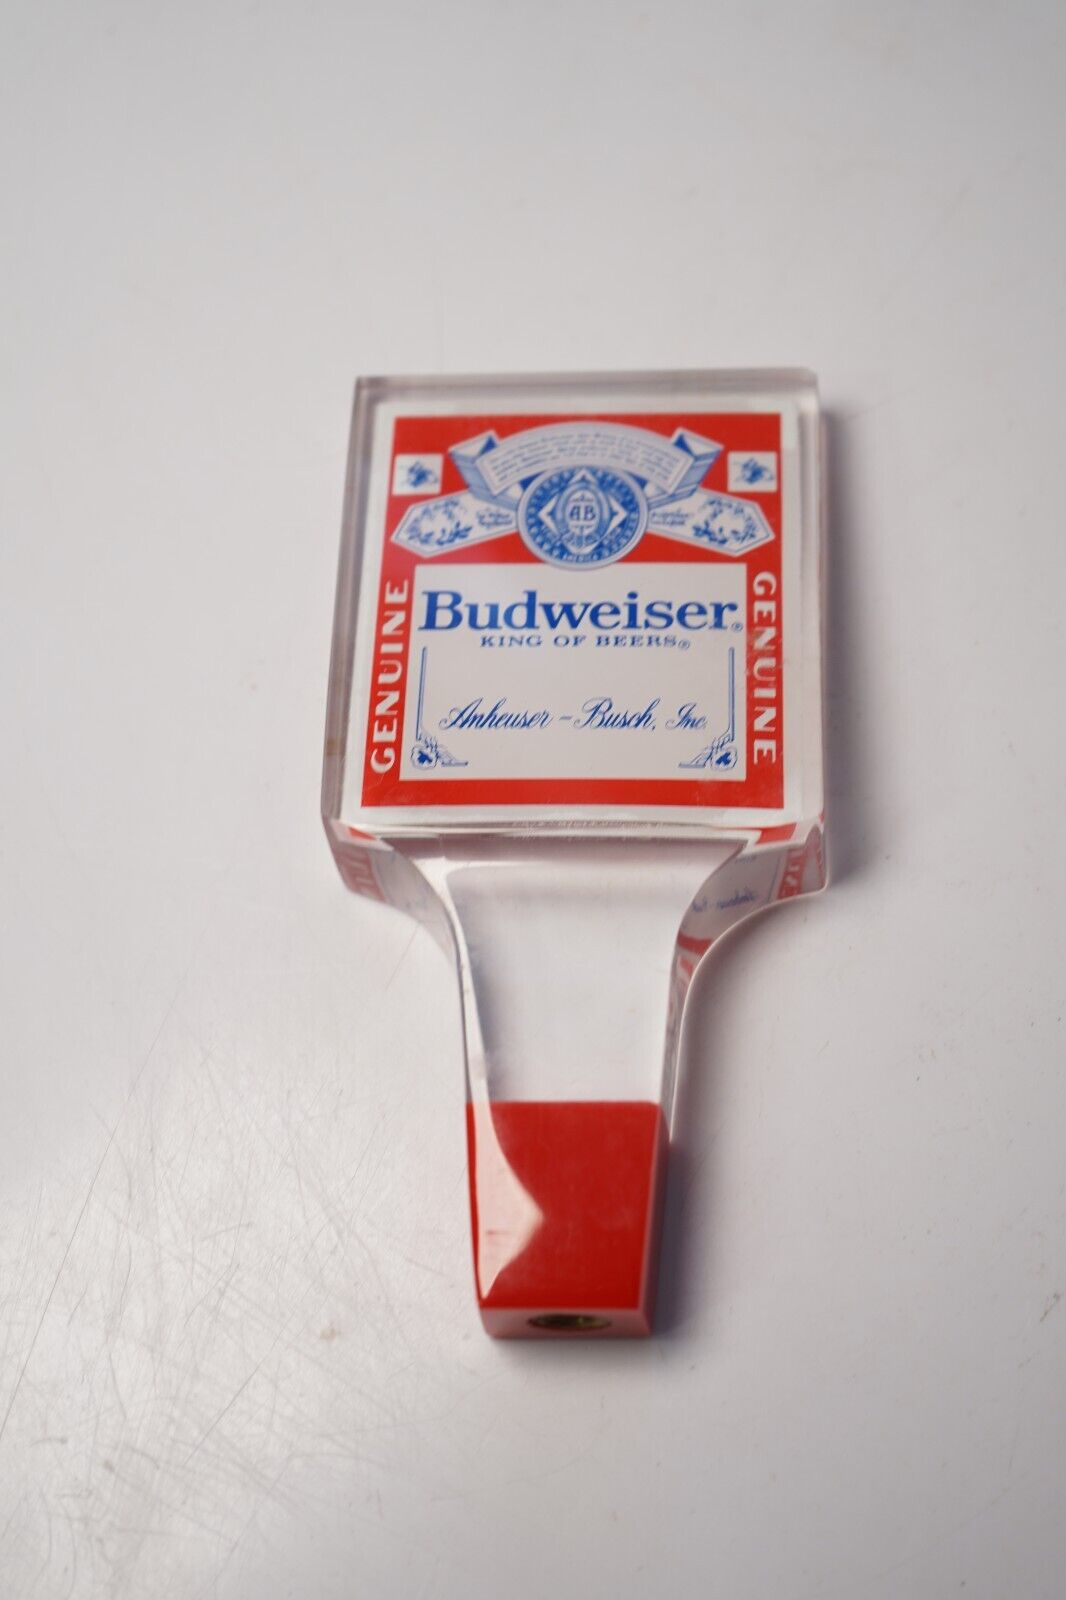 Acrylic BUDWEISER KING OF BEERS Beer Tap Handle Anheuser Bush Inc Vintage RED